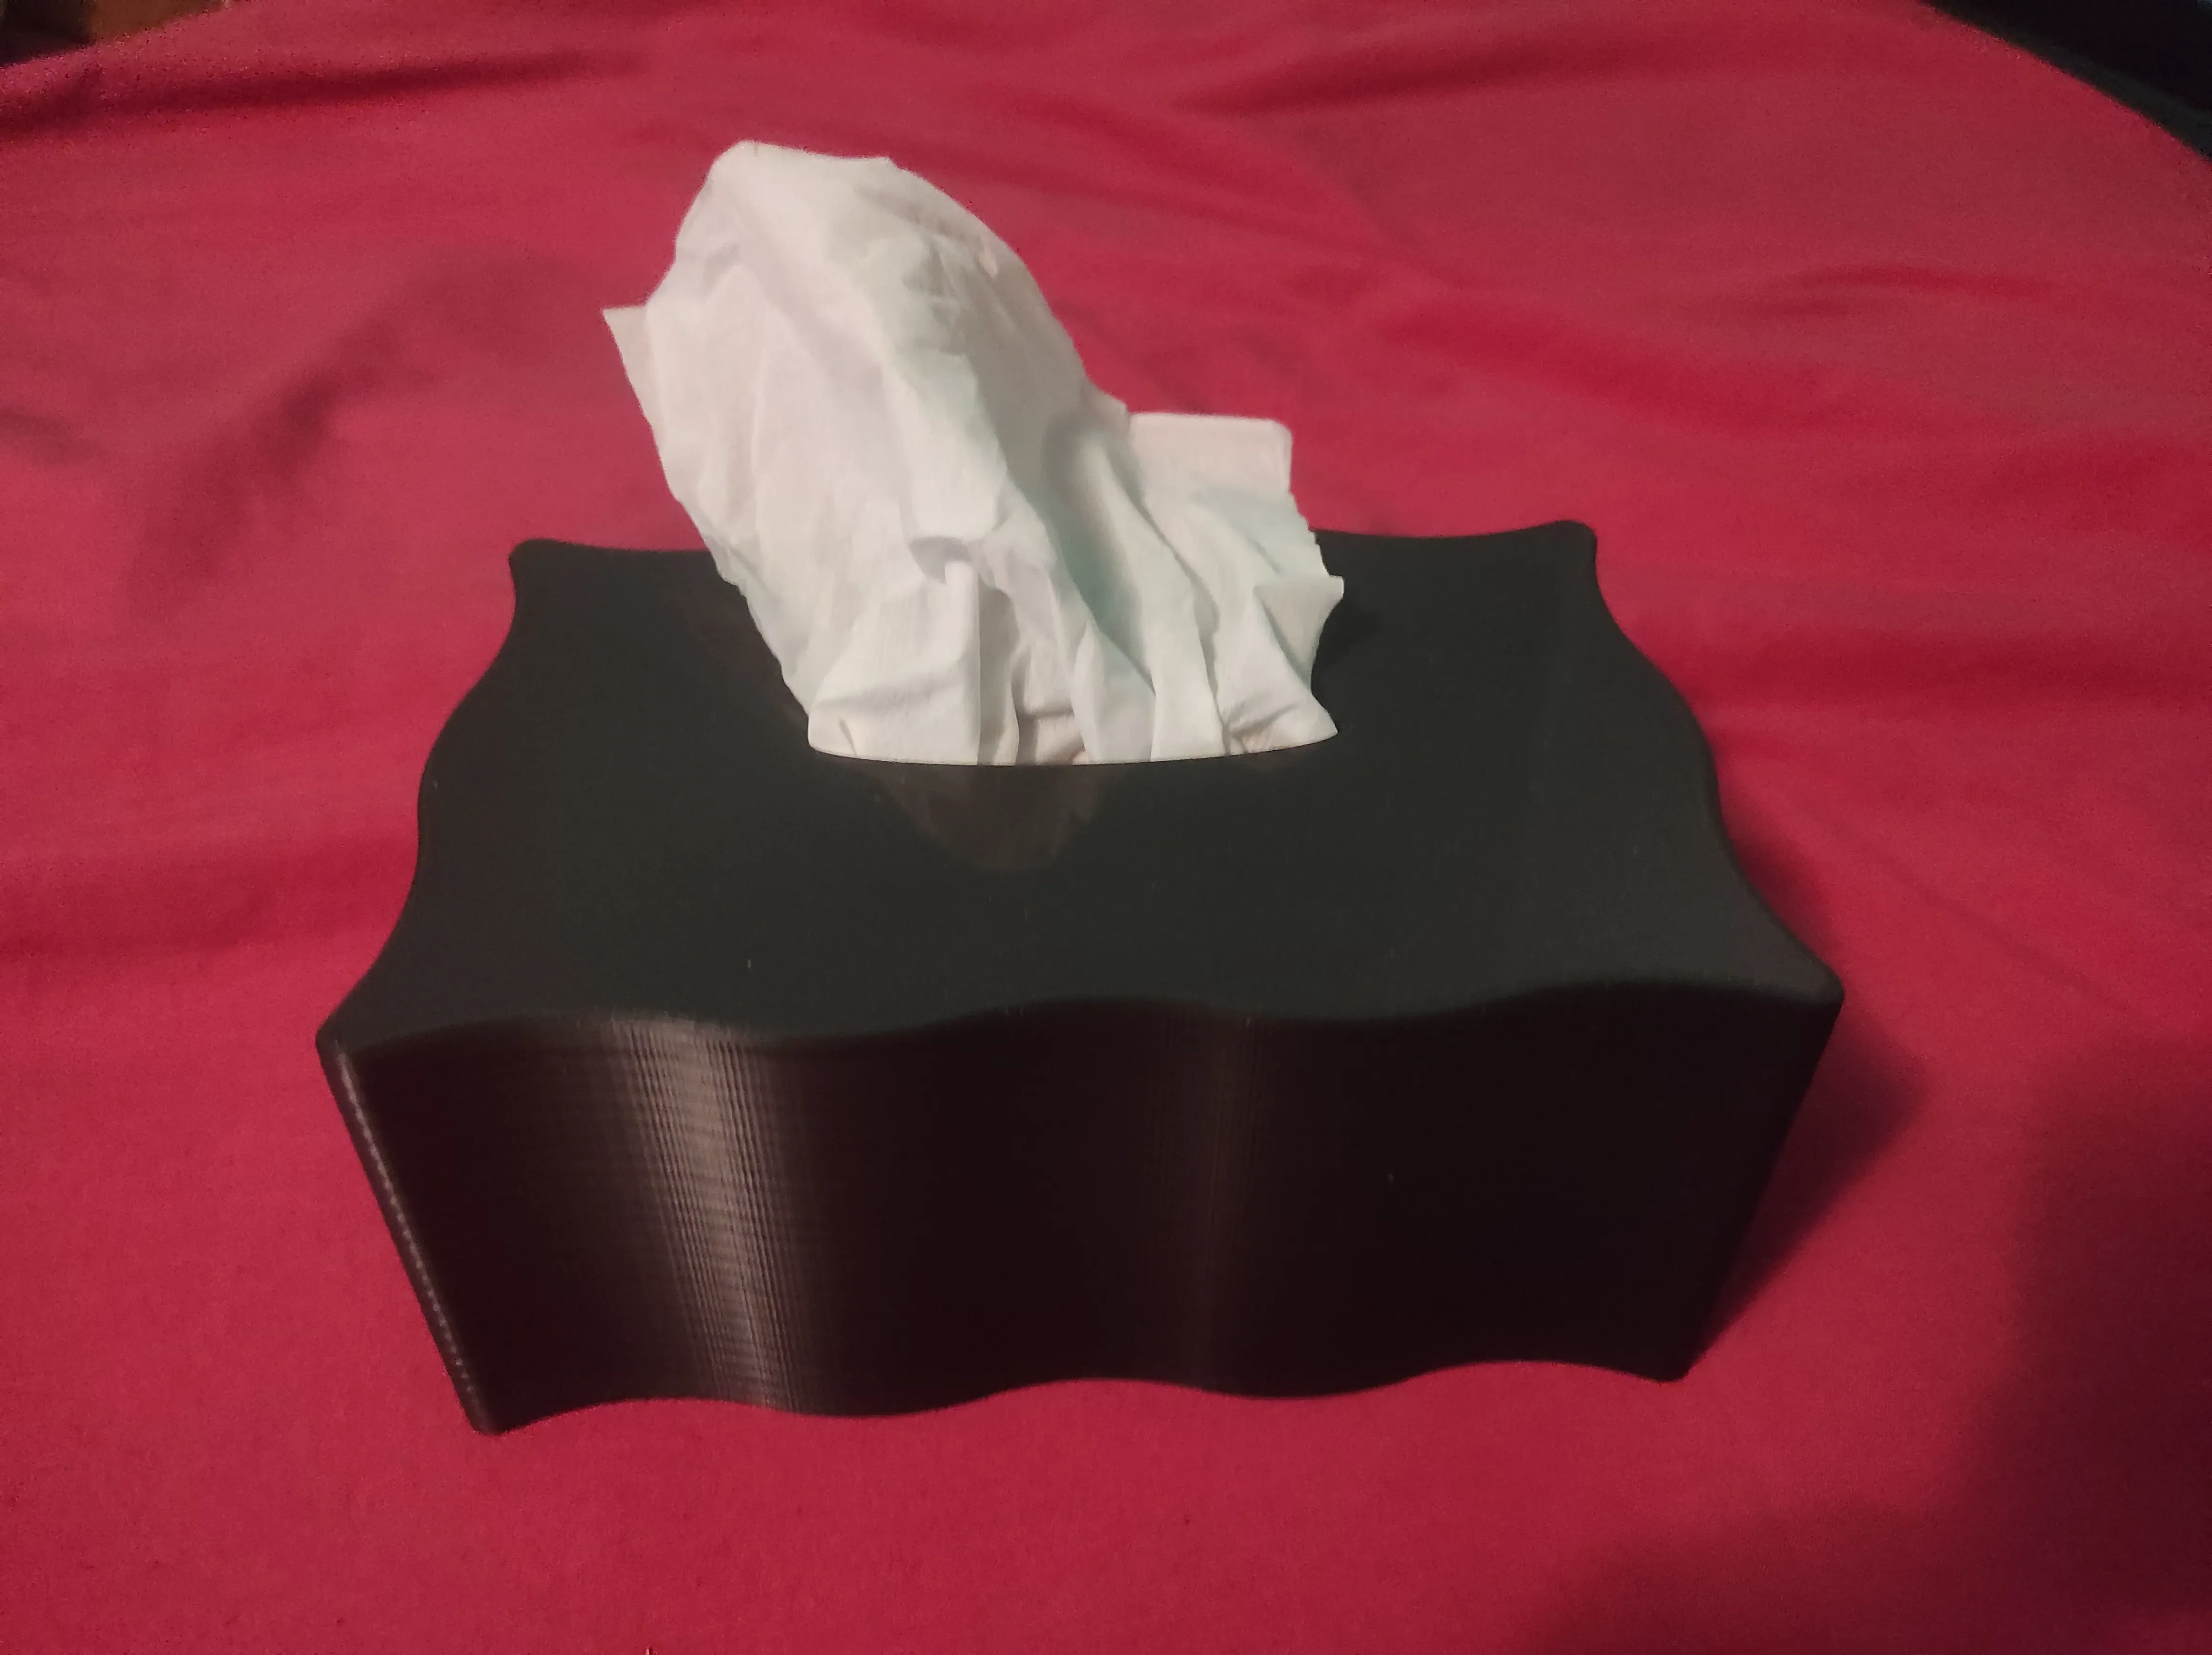 Vase mode tissue boxes